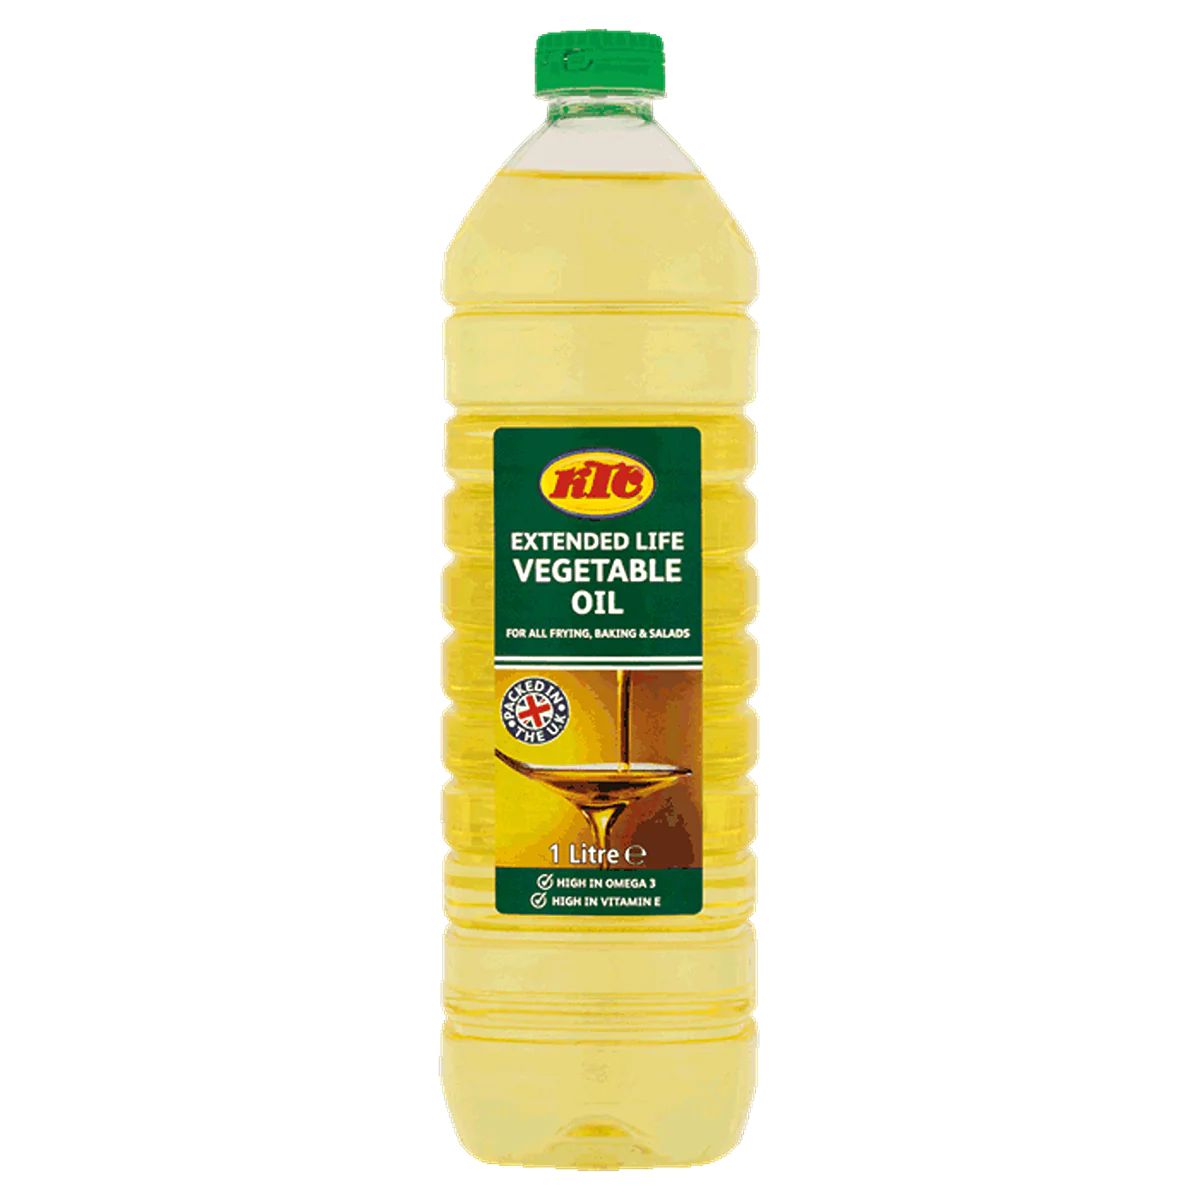 A one-liter bottle of KTC - Vegetable Oil Extended Life - 1L.